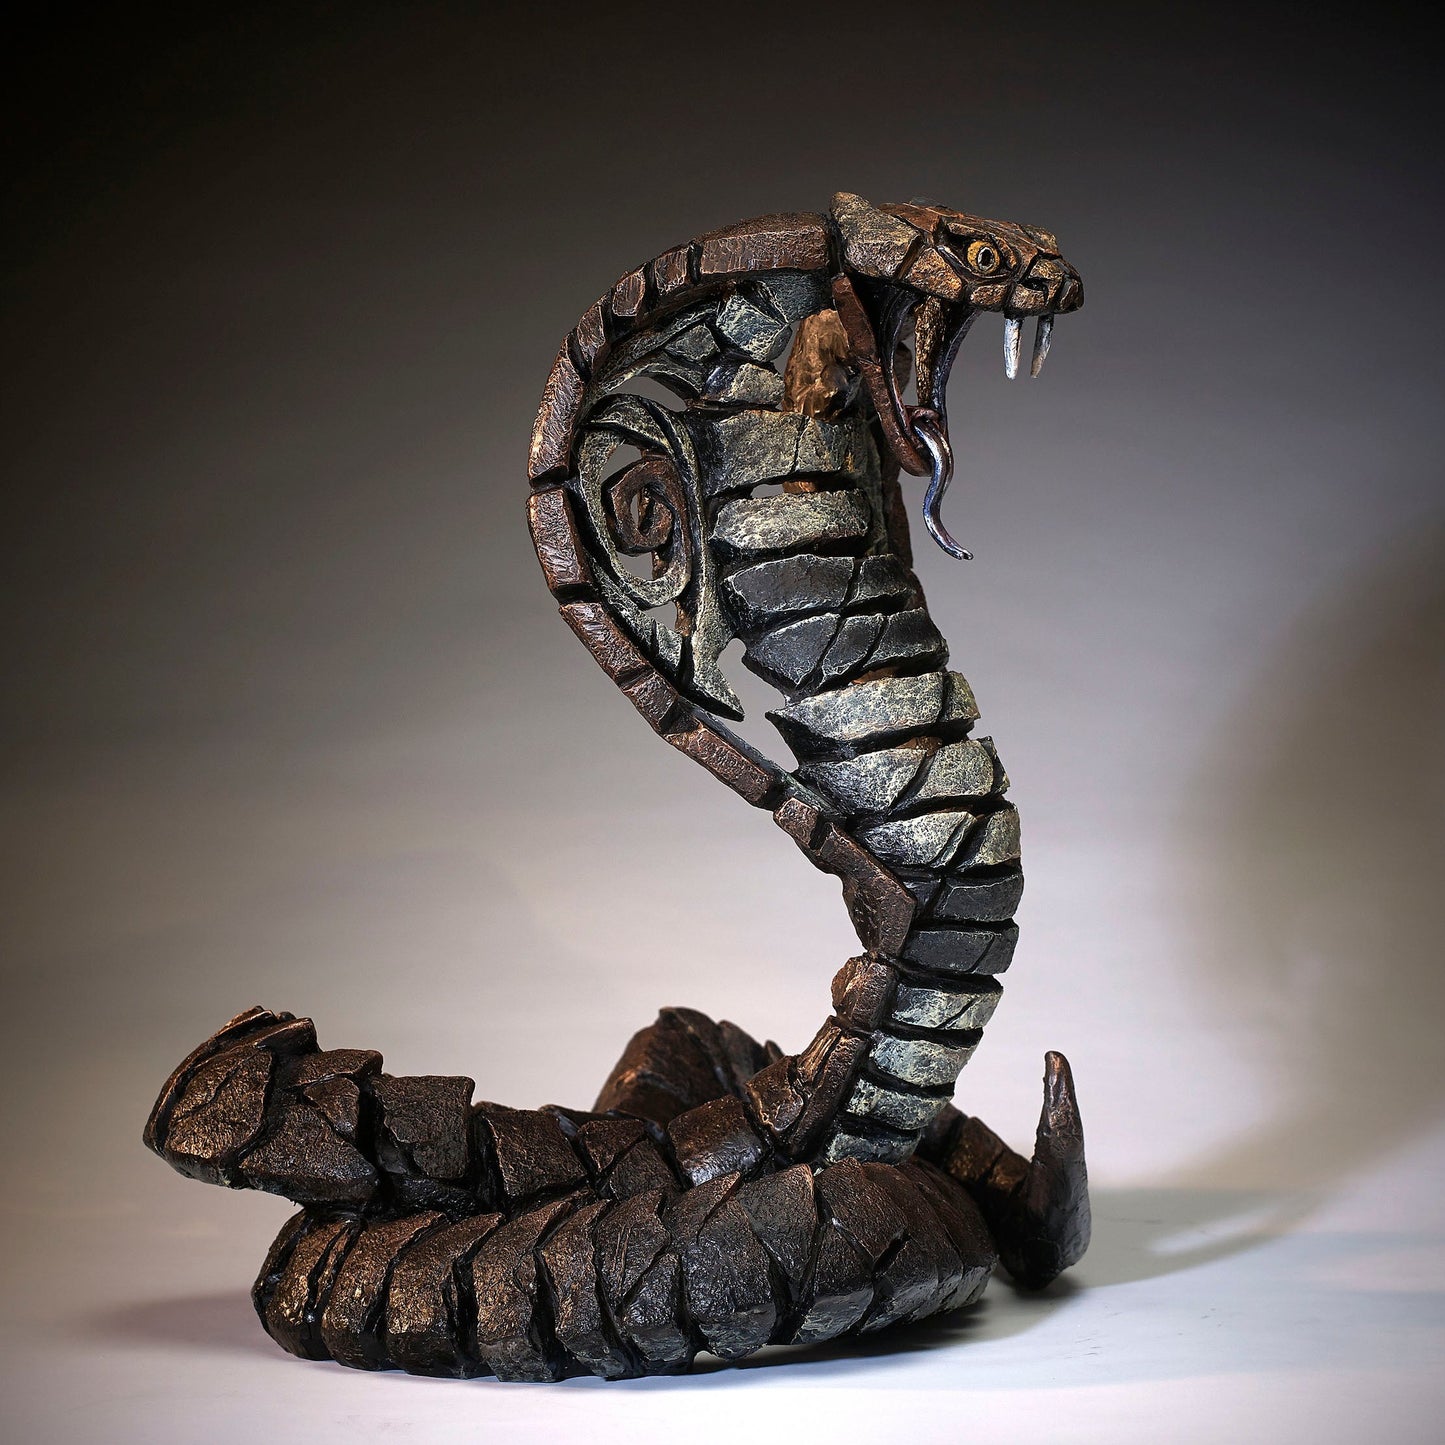 Cobra Copper Brown by Edge Sculpture from Matt Buckley